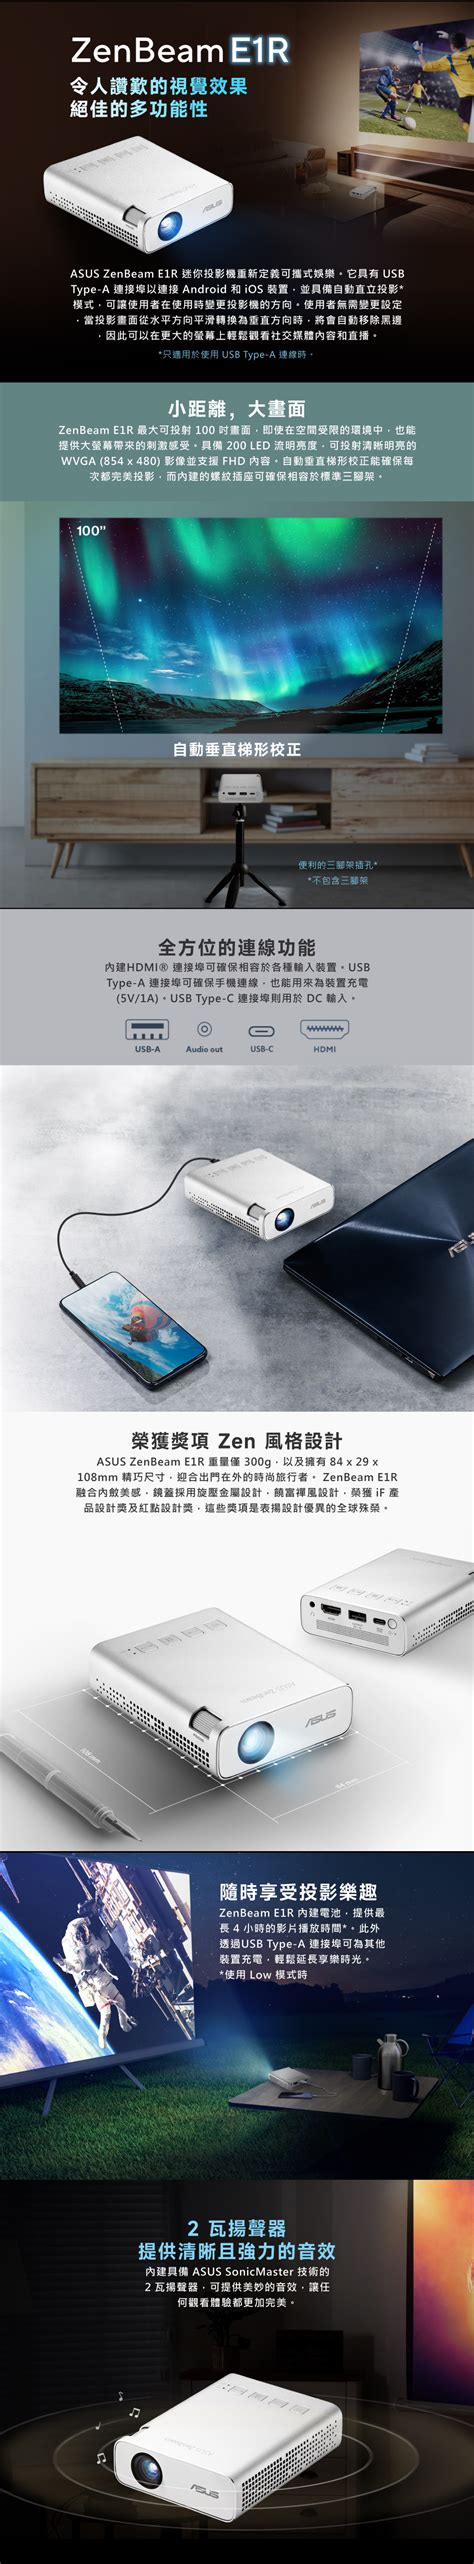 華碩 asus zenbeam e1r led 微型投影機 含dongle zingala商店